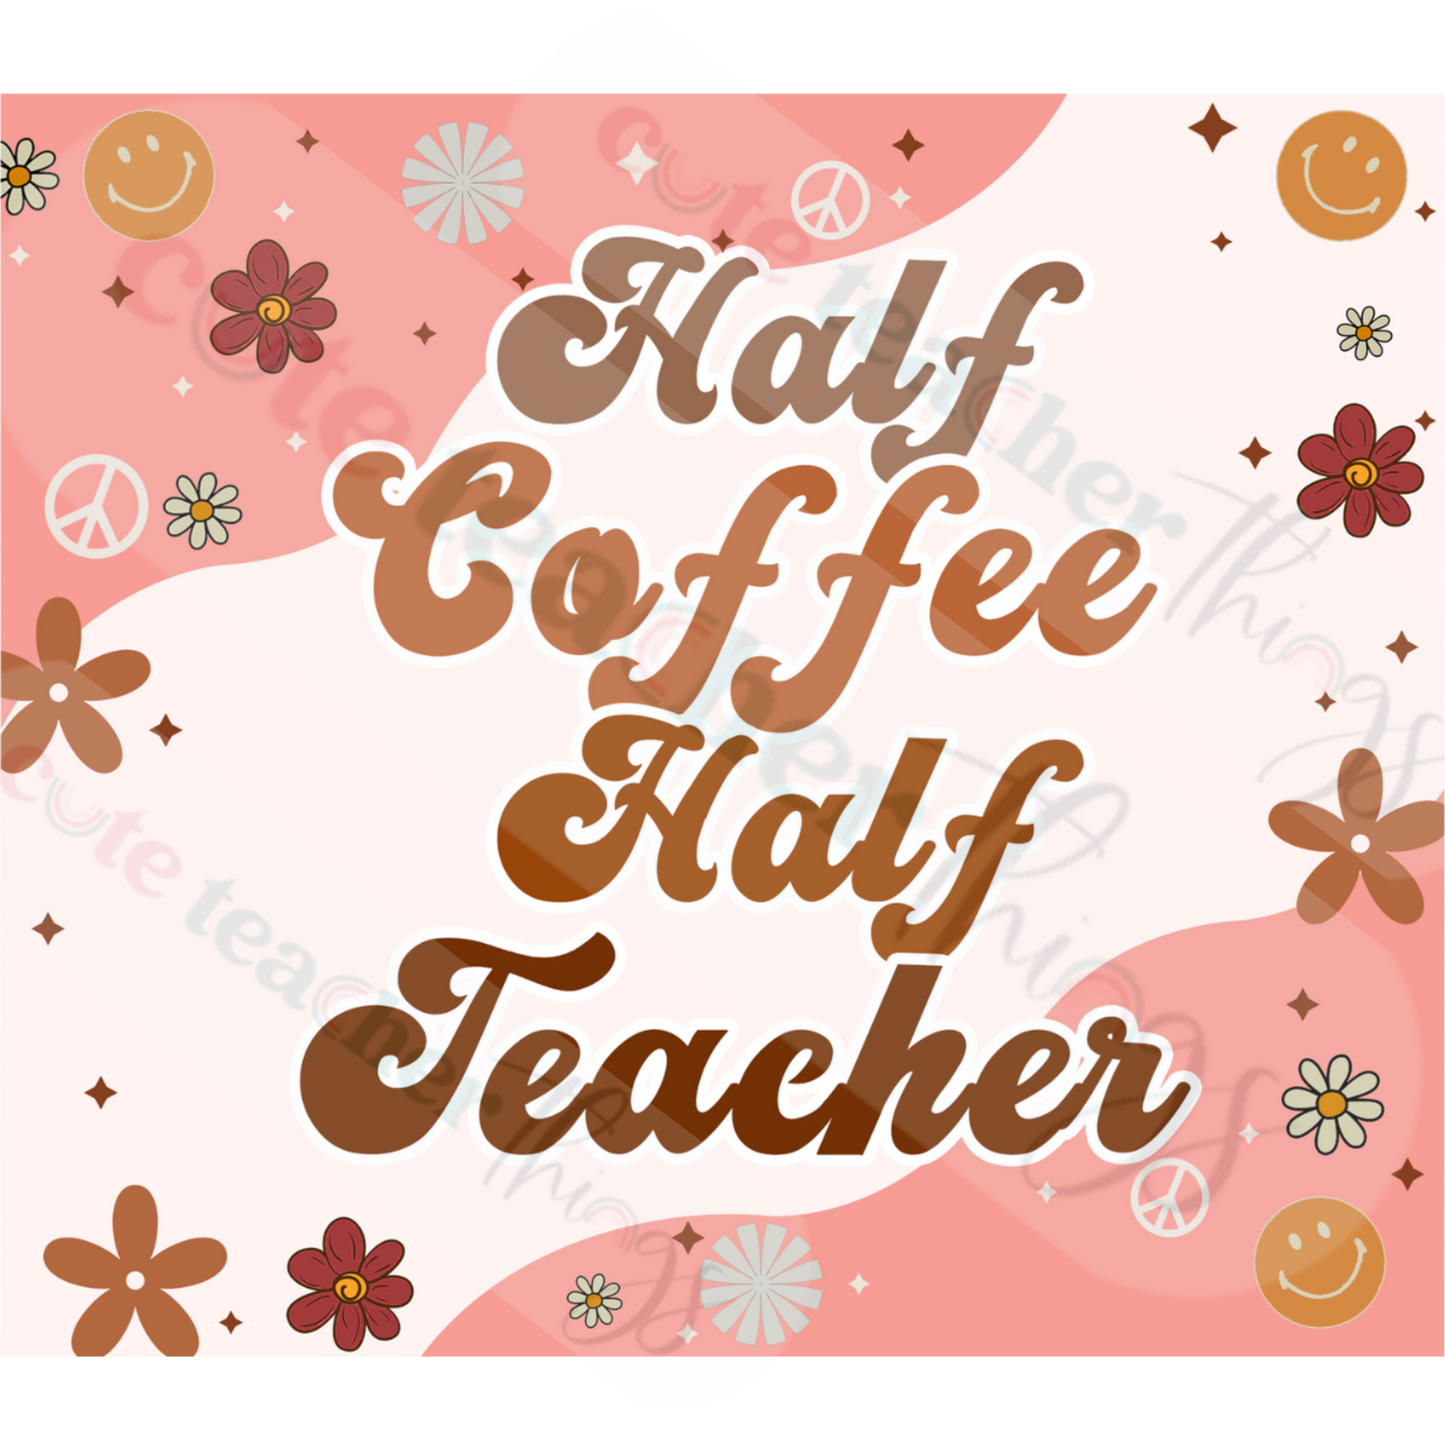 half coffee half teacher design